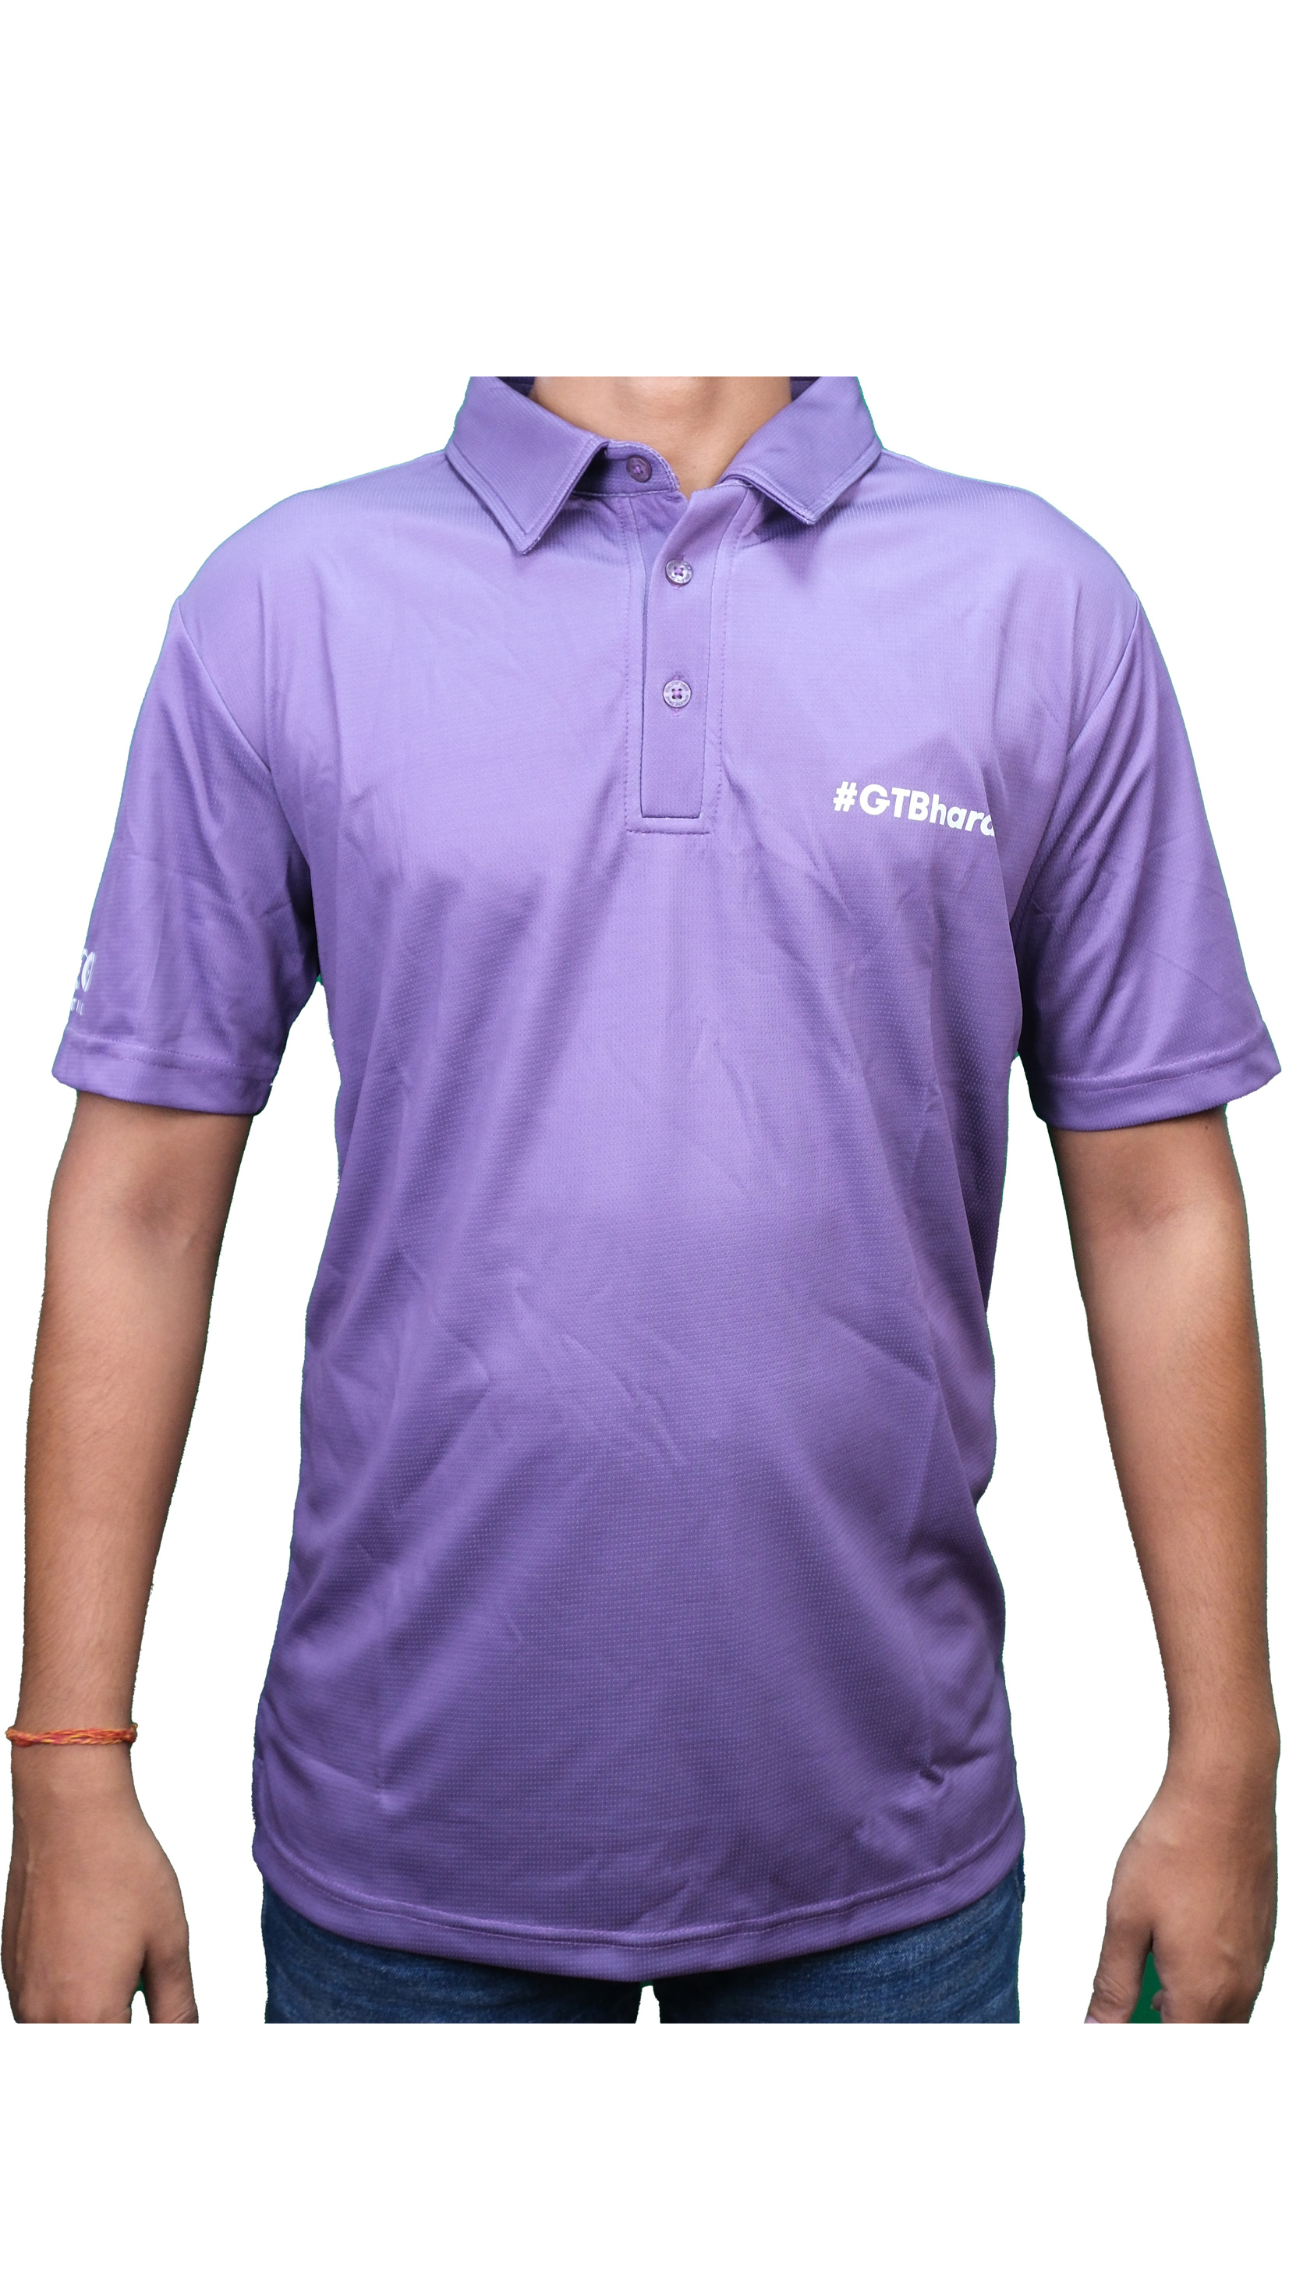 Athletic Drive purple t-shirt